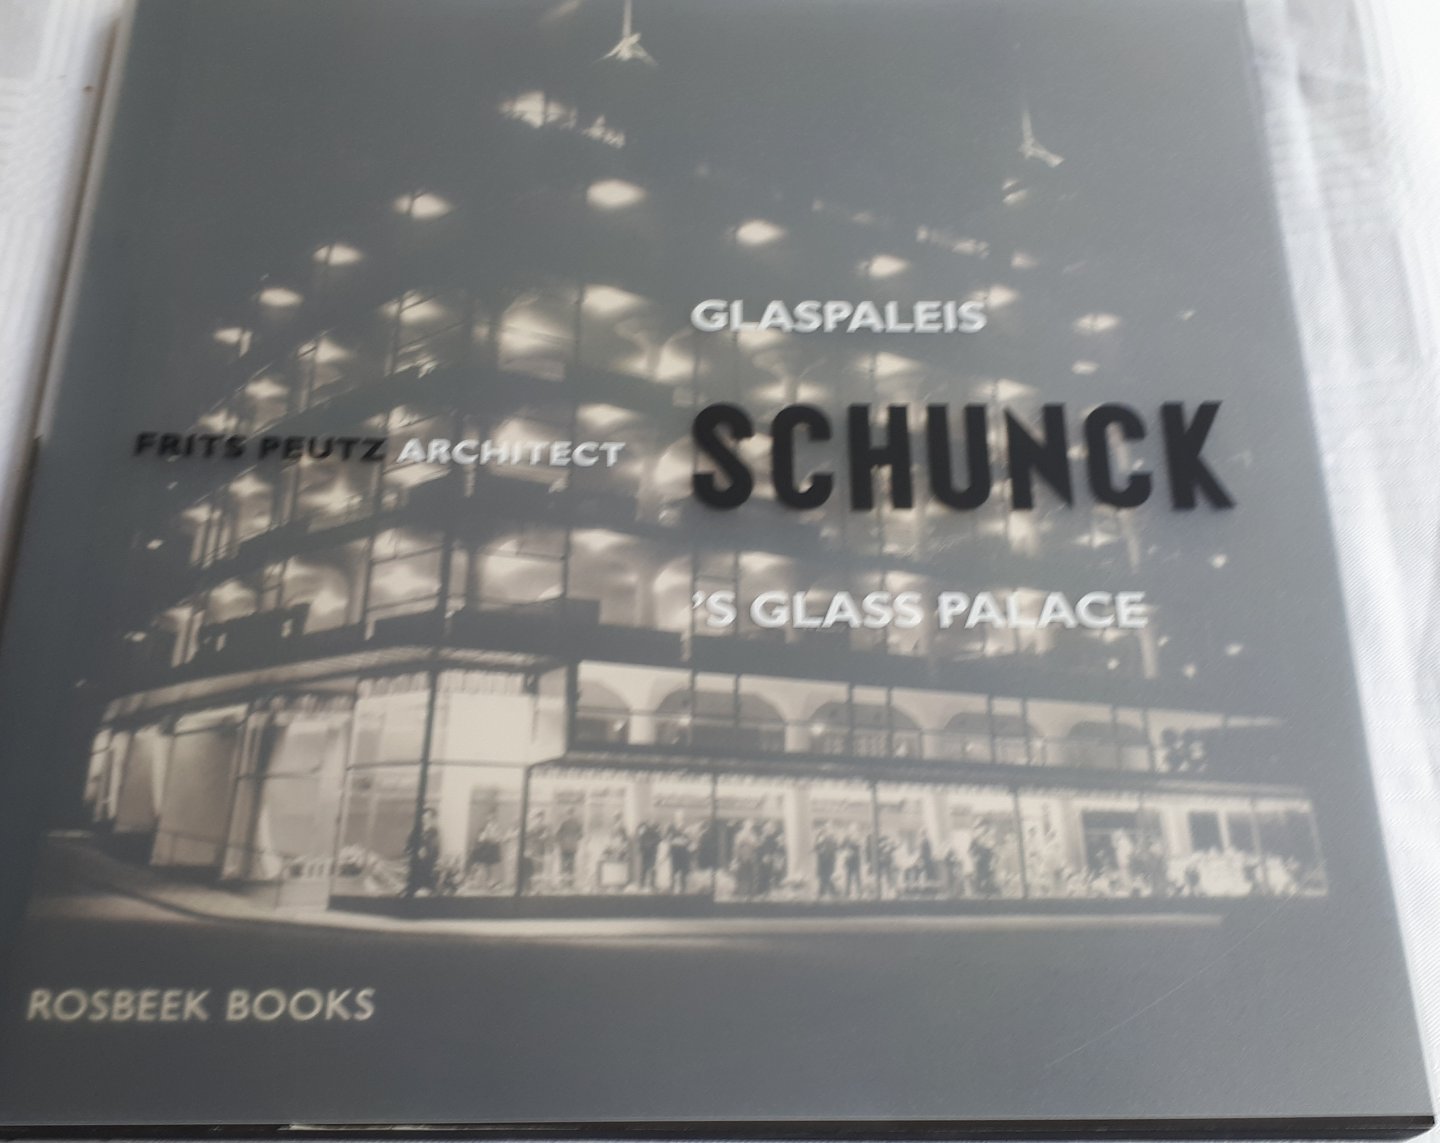 GRAATSMA, William Pars - Glaspaleis Schunck. Fritz Peutz architect